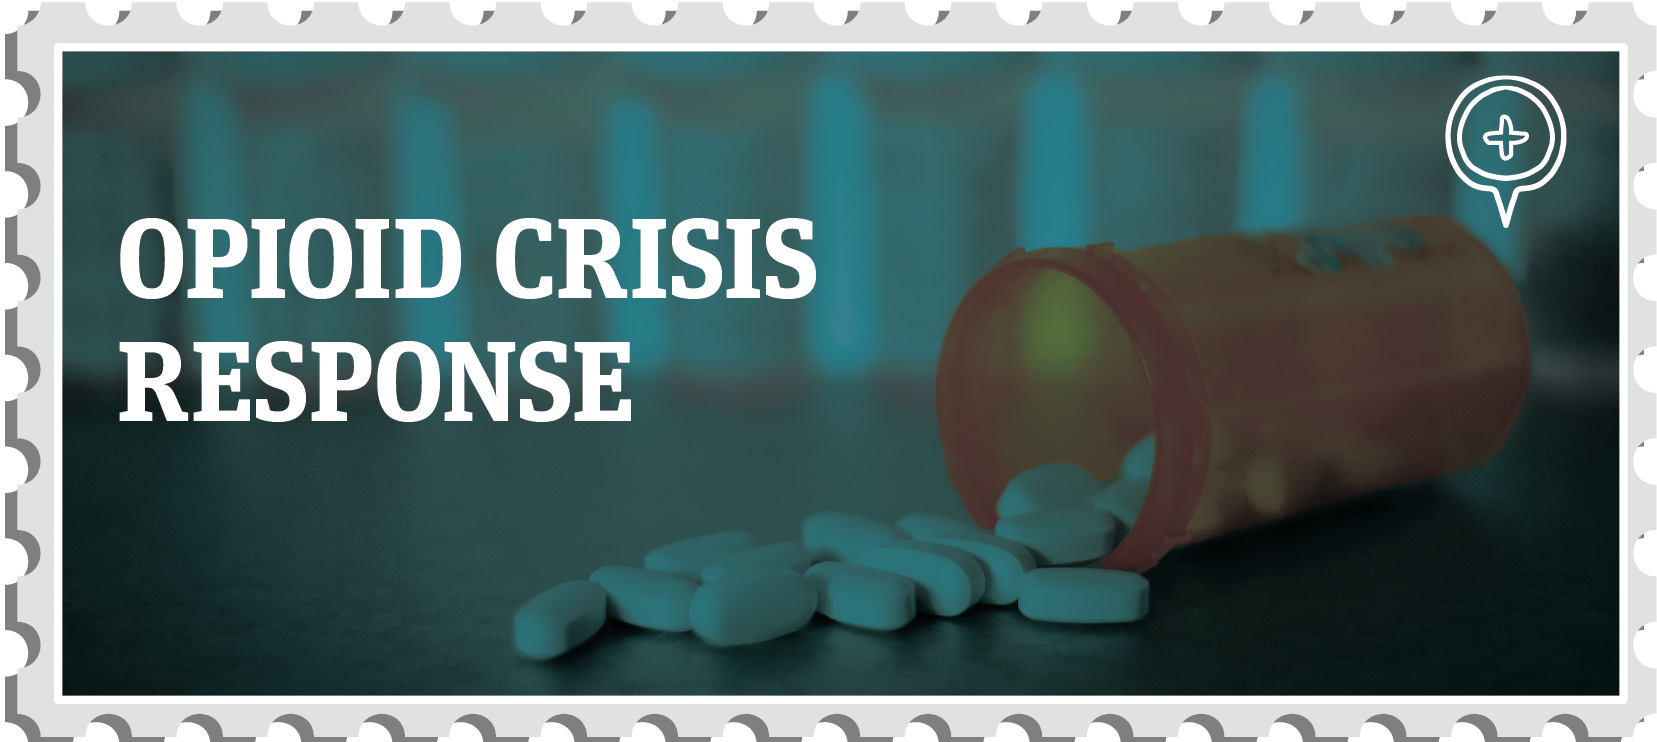 Opioid crisis response